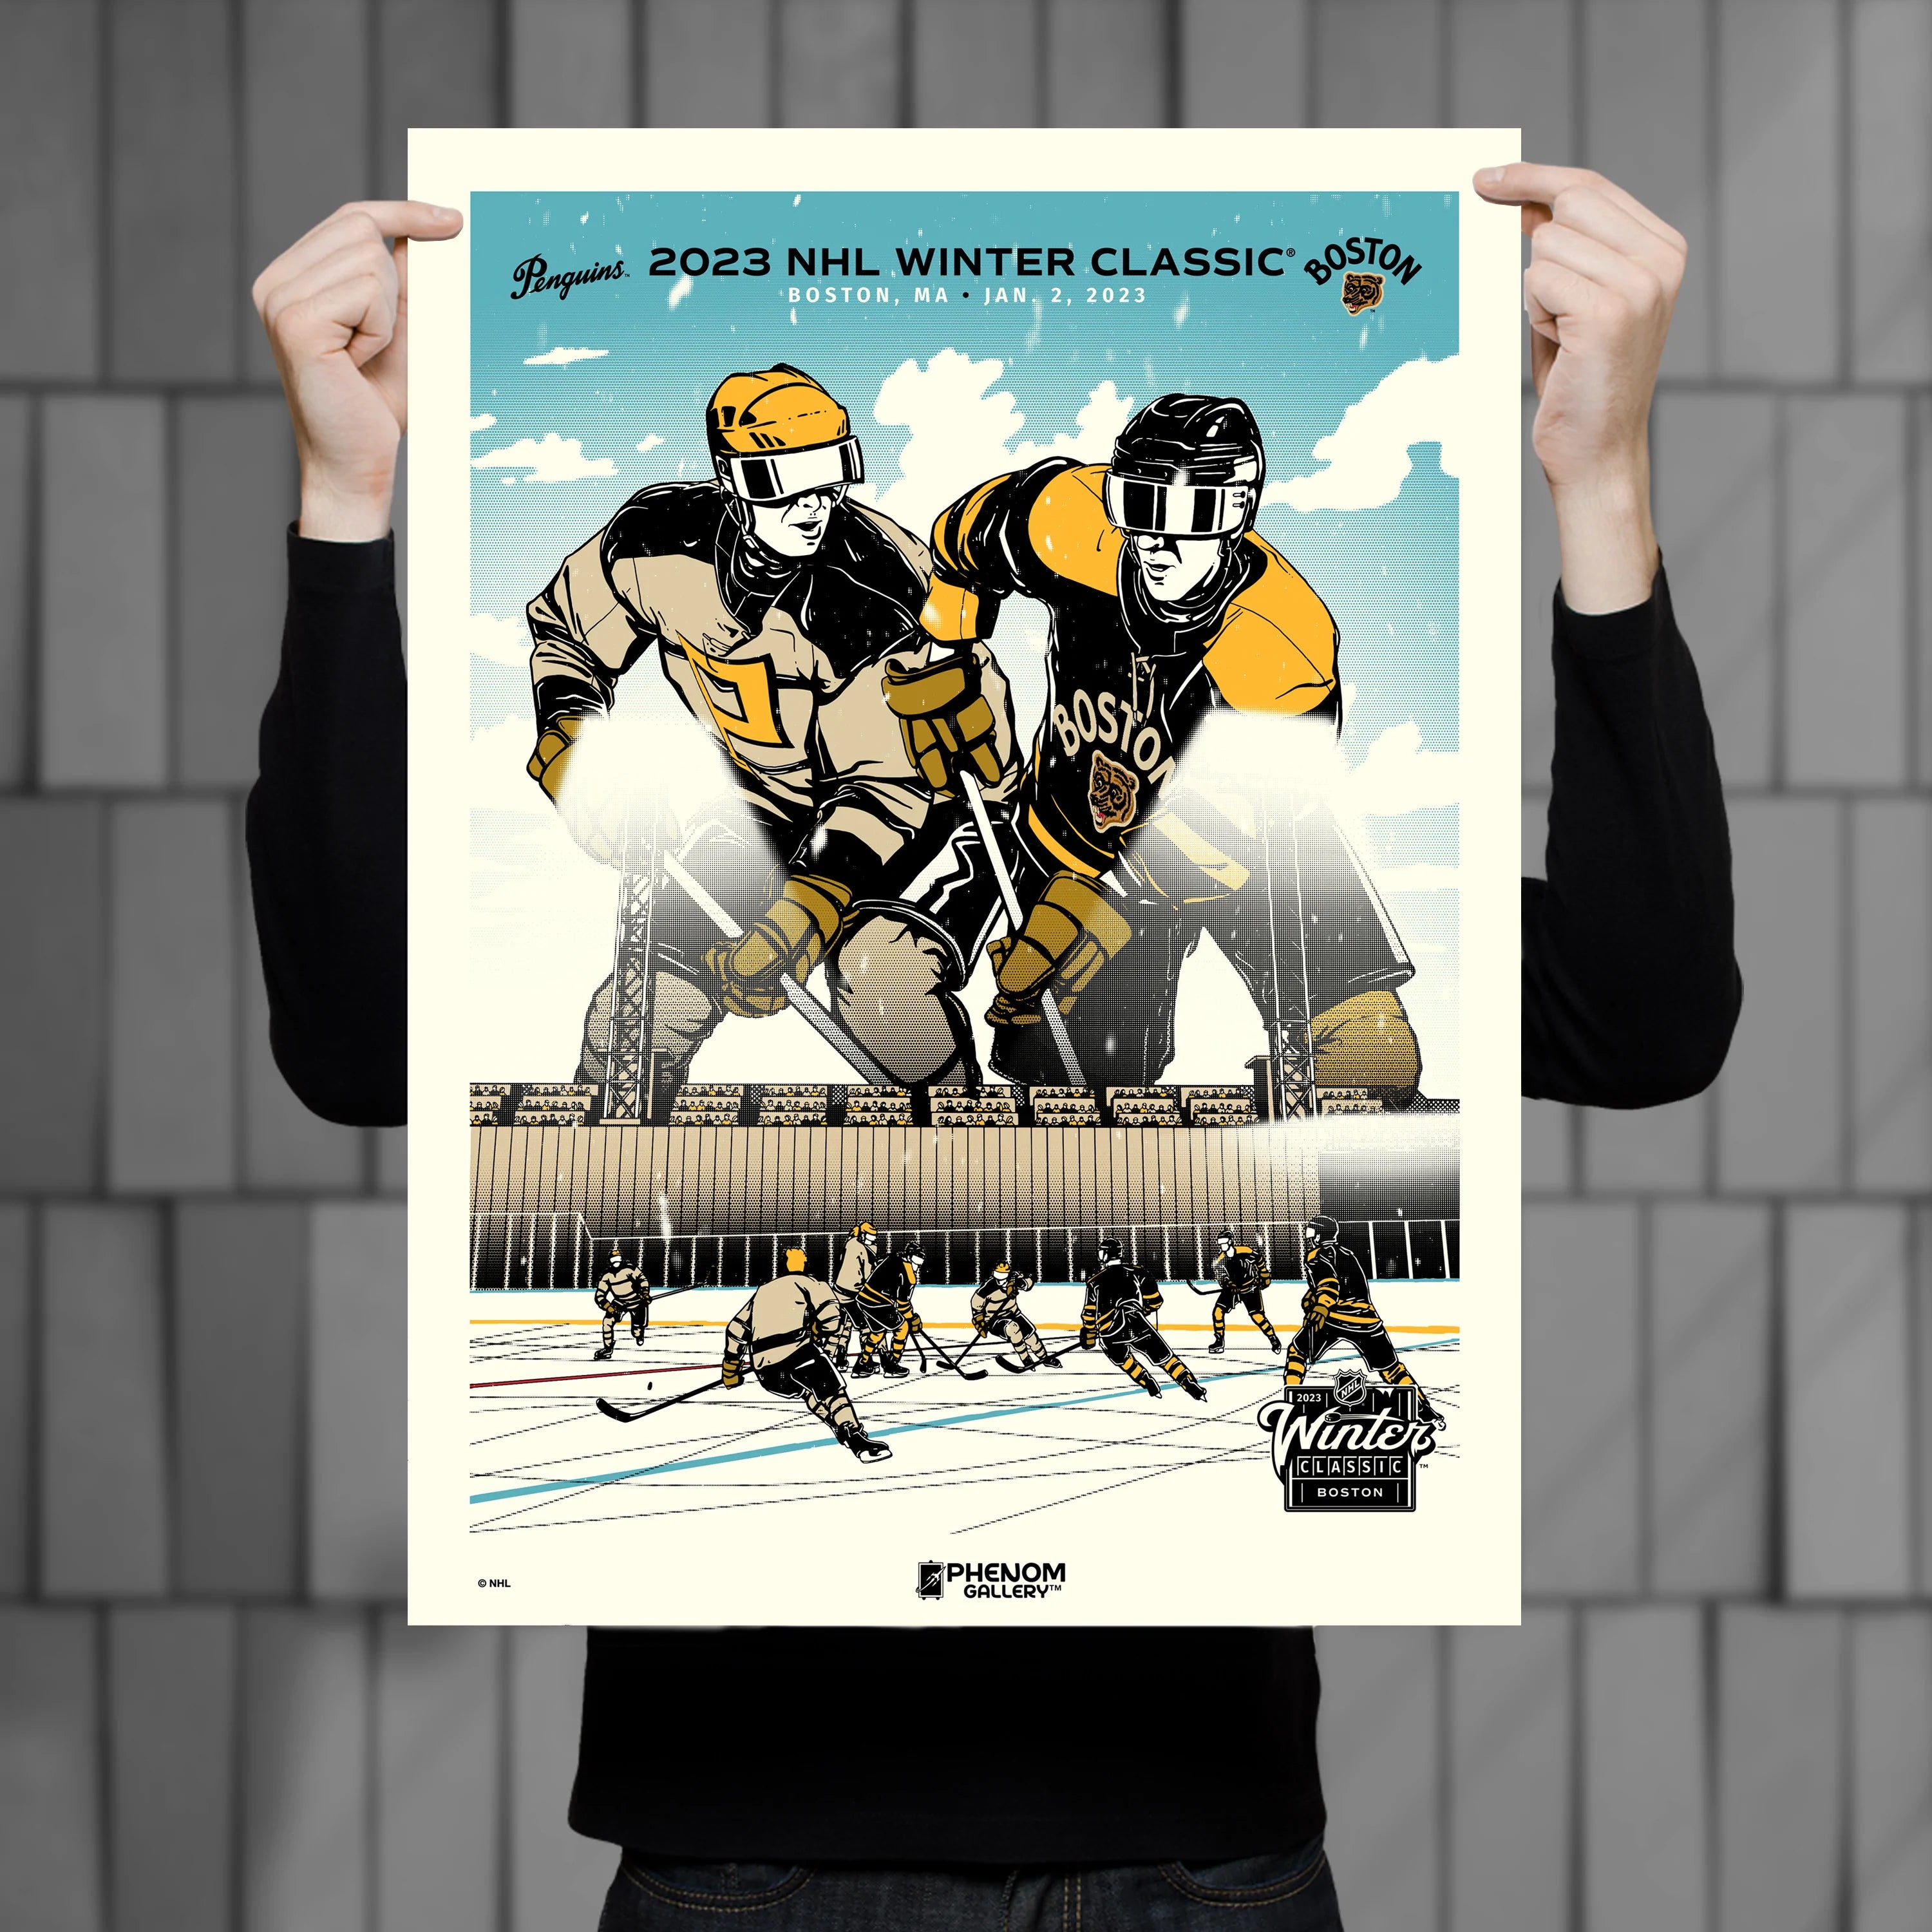 Bruins vs Penguins In 2023 Winter Classic Jan. 2 At Fenway Park